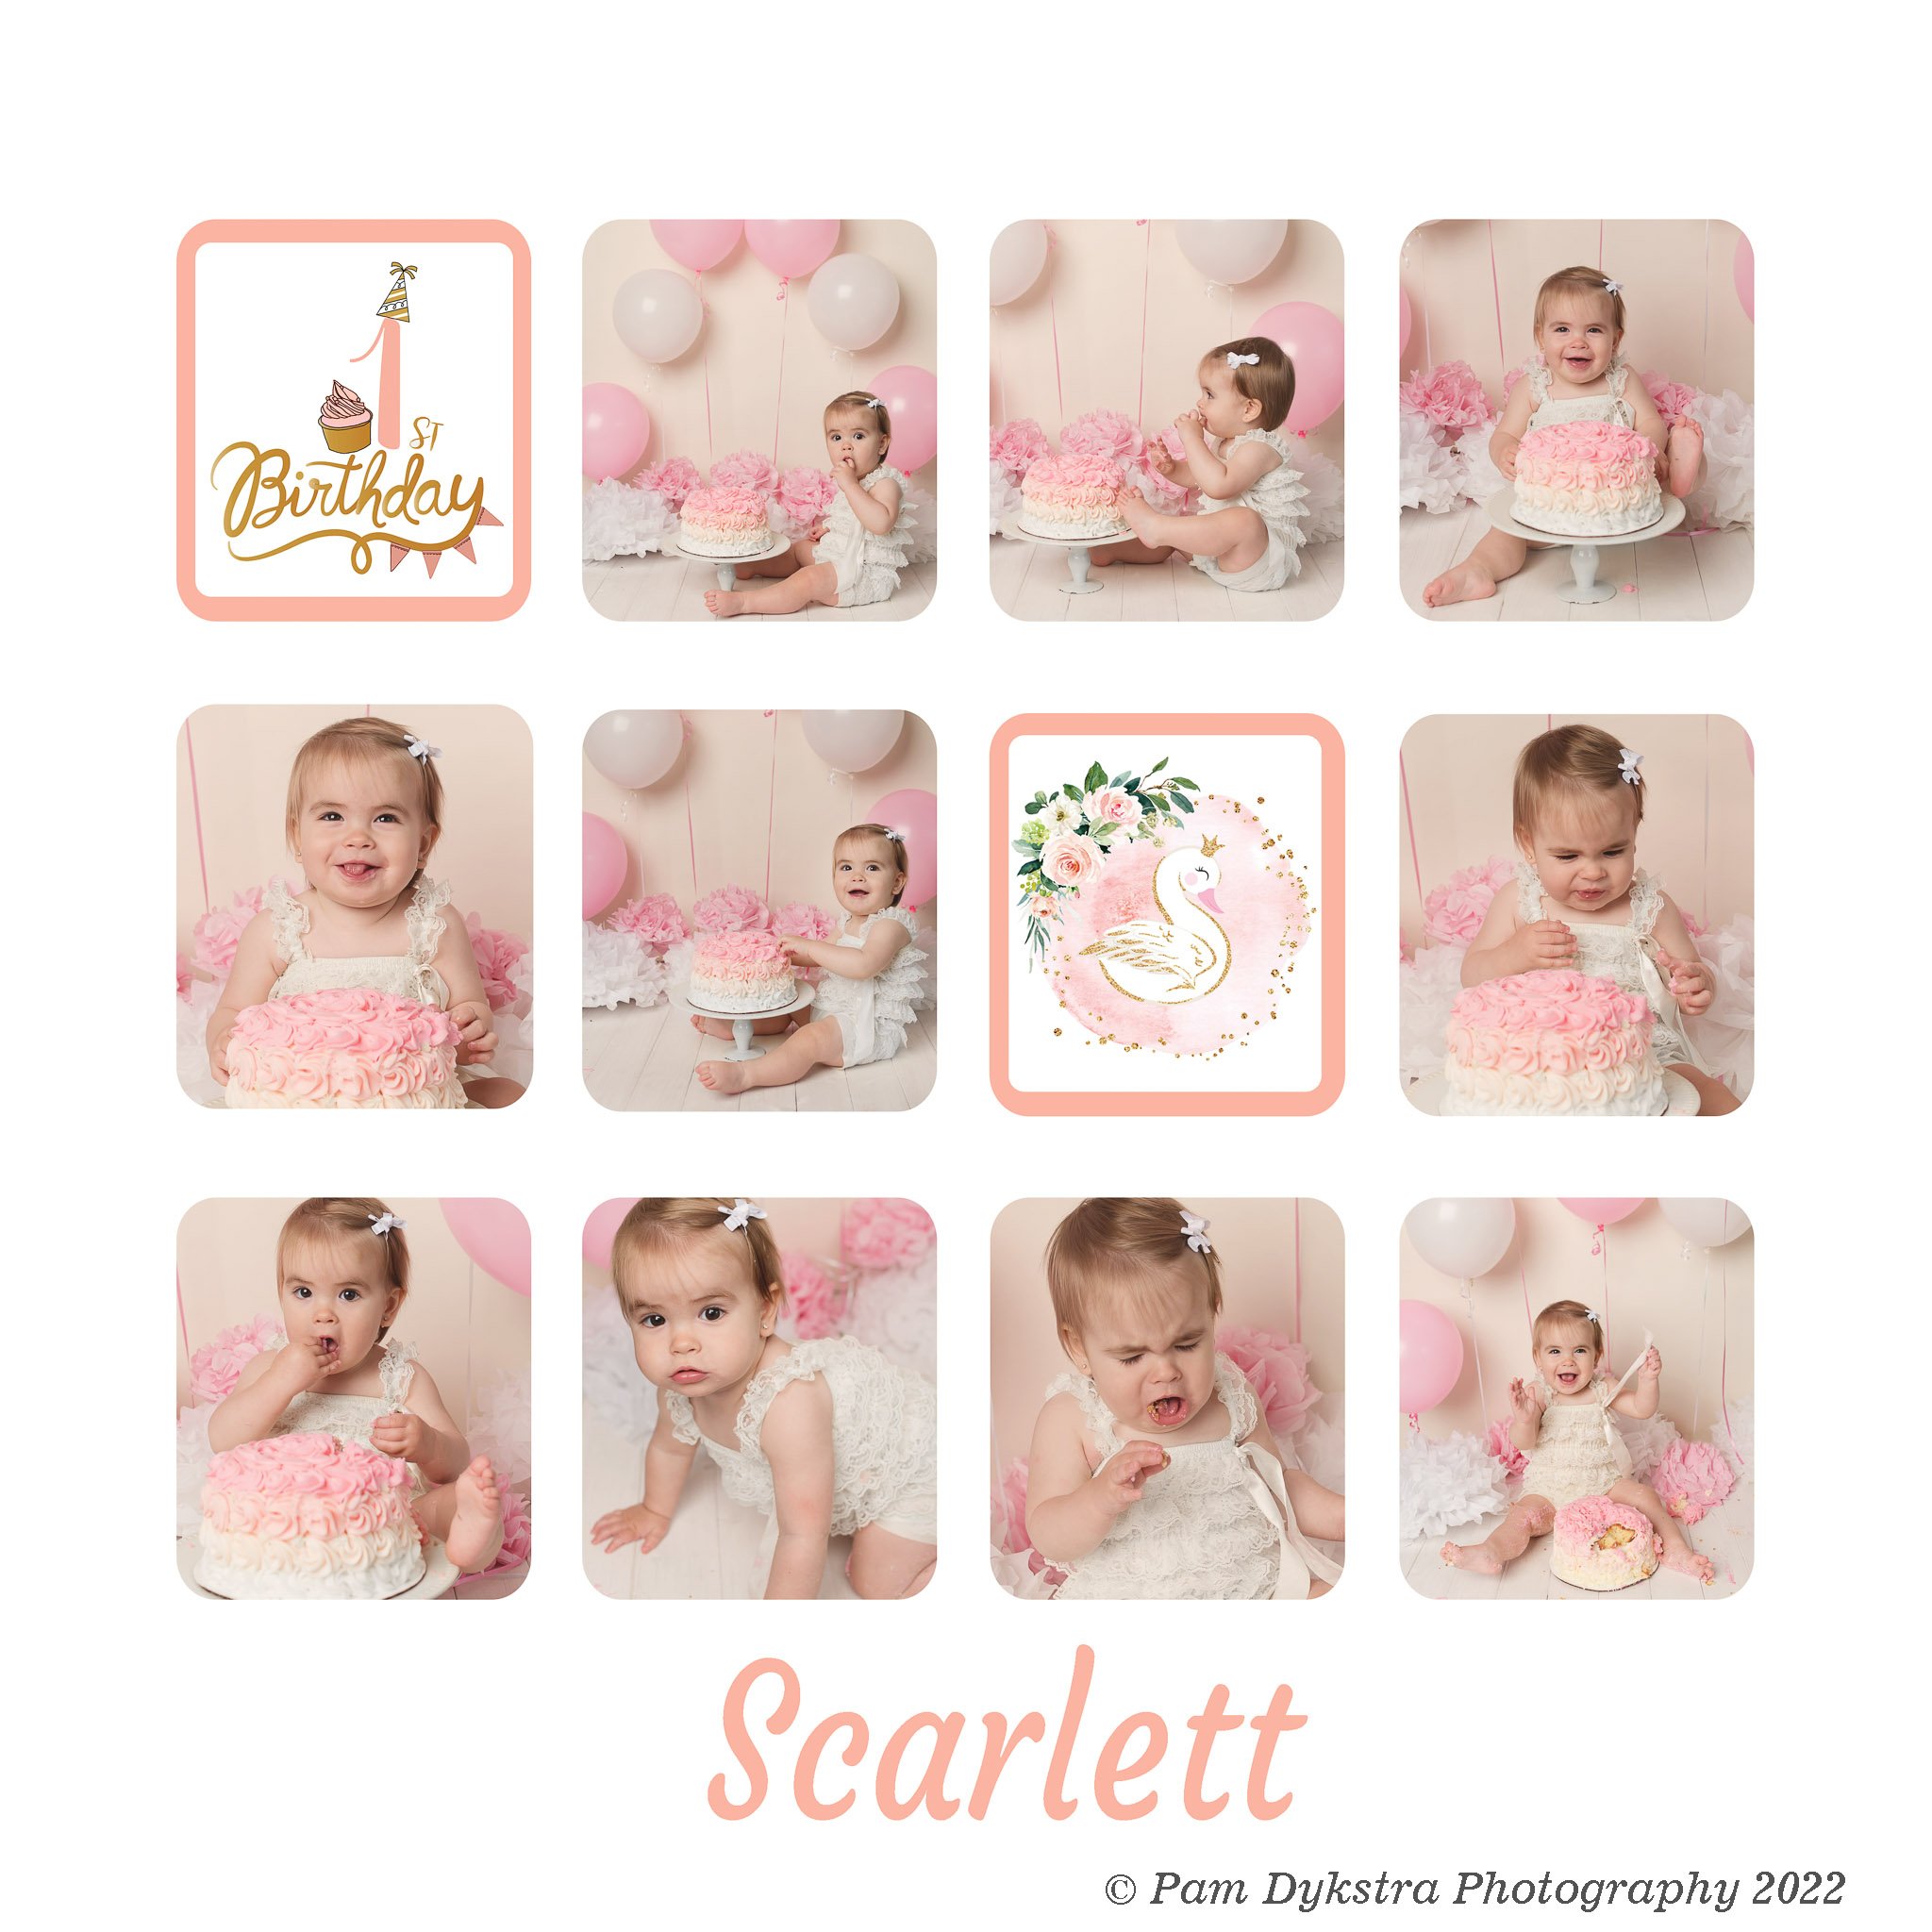 Scarlett1stBday12x12.jpg